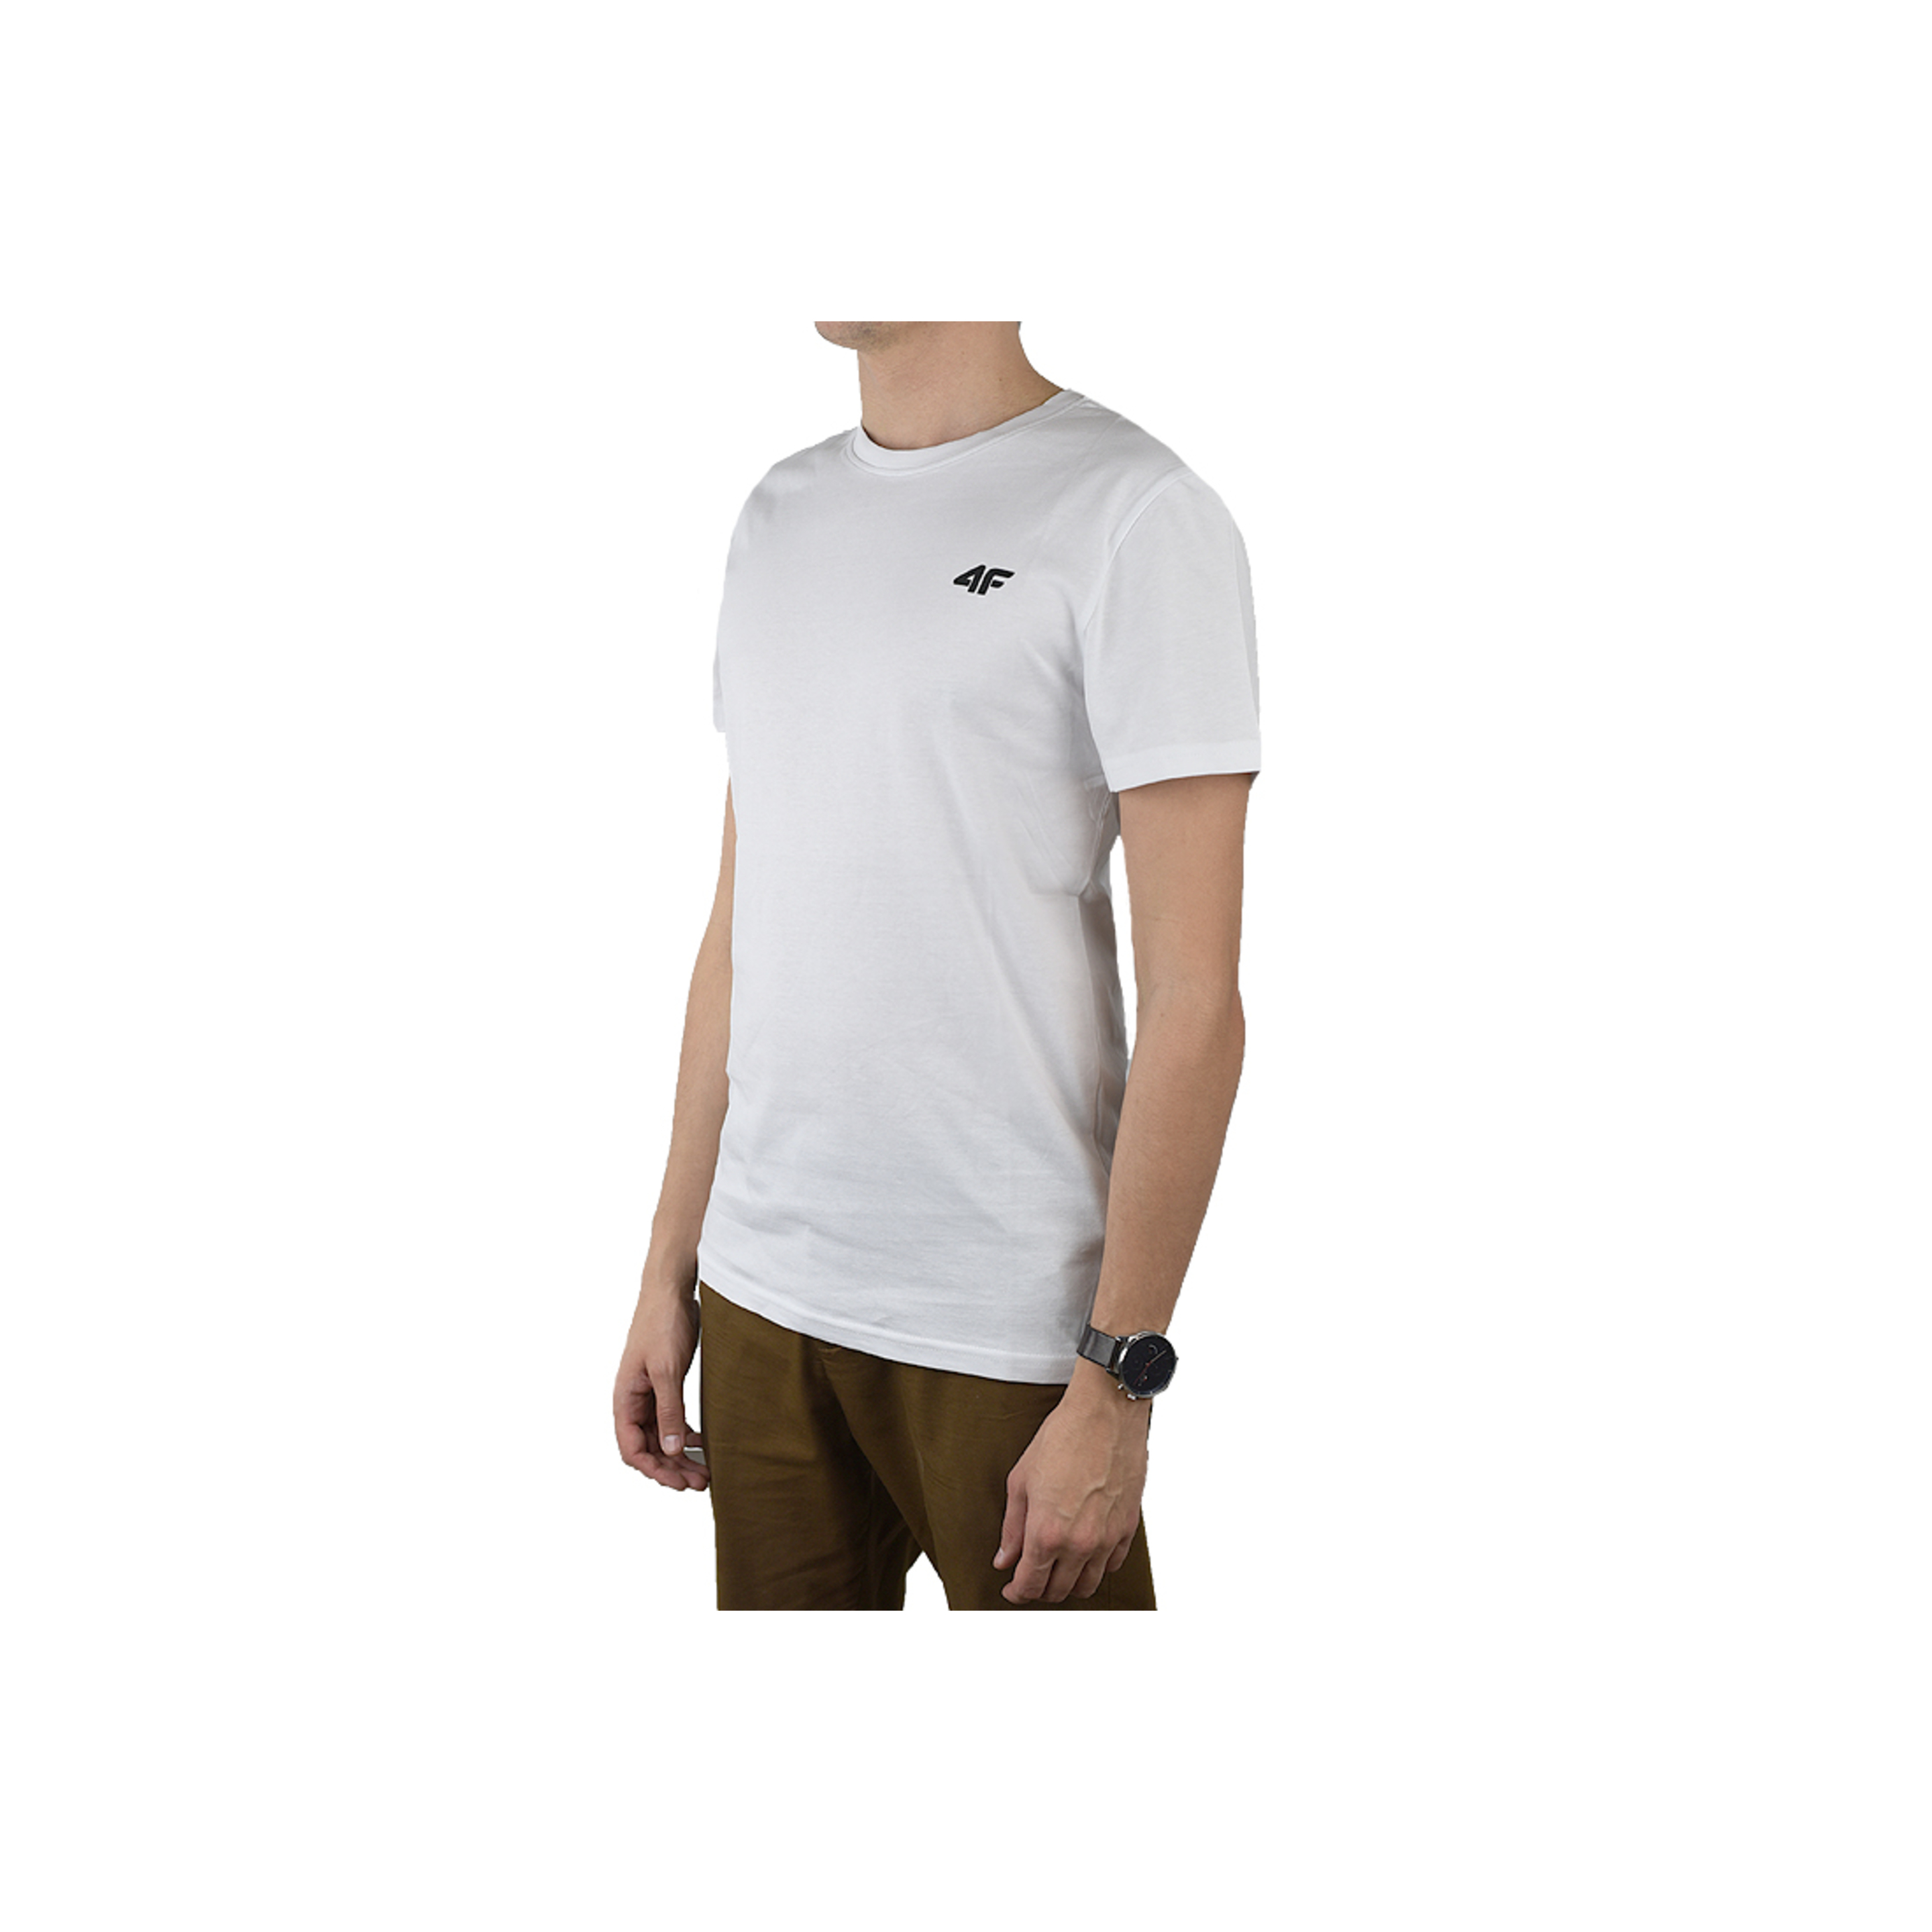 4f Men's T-shirt Nosh4-tsm003-10s